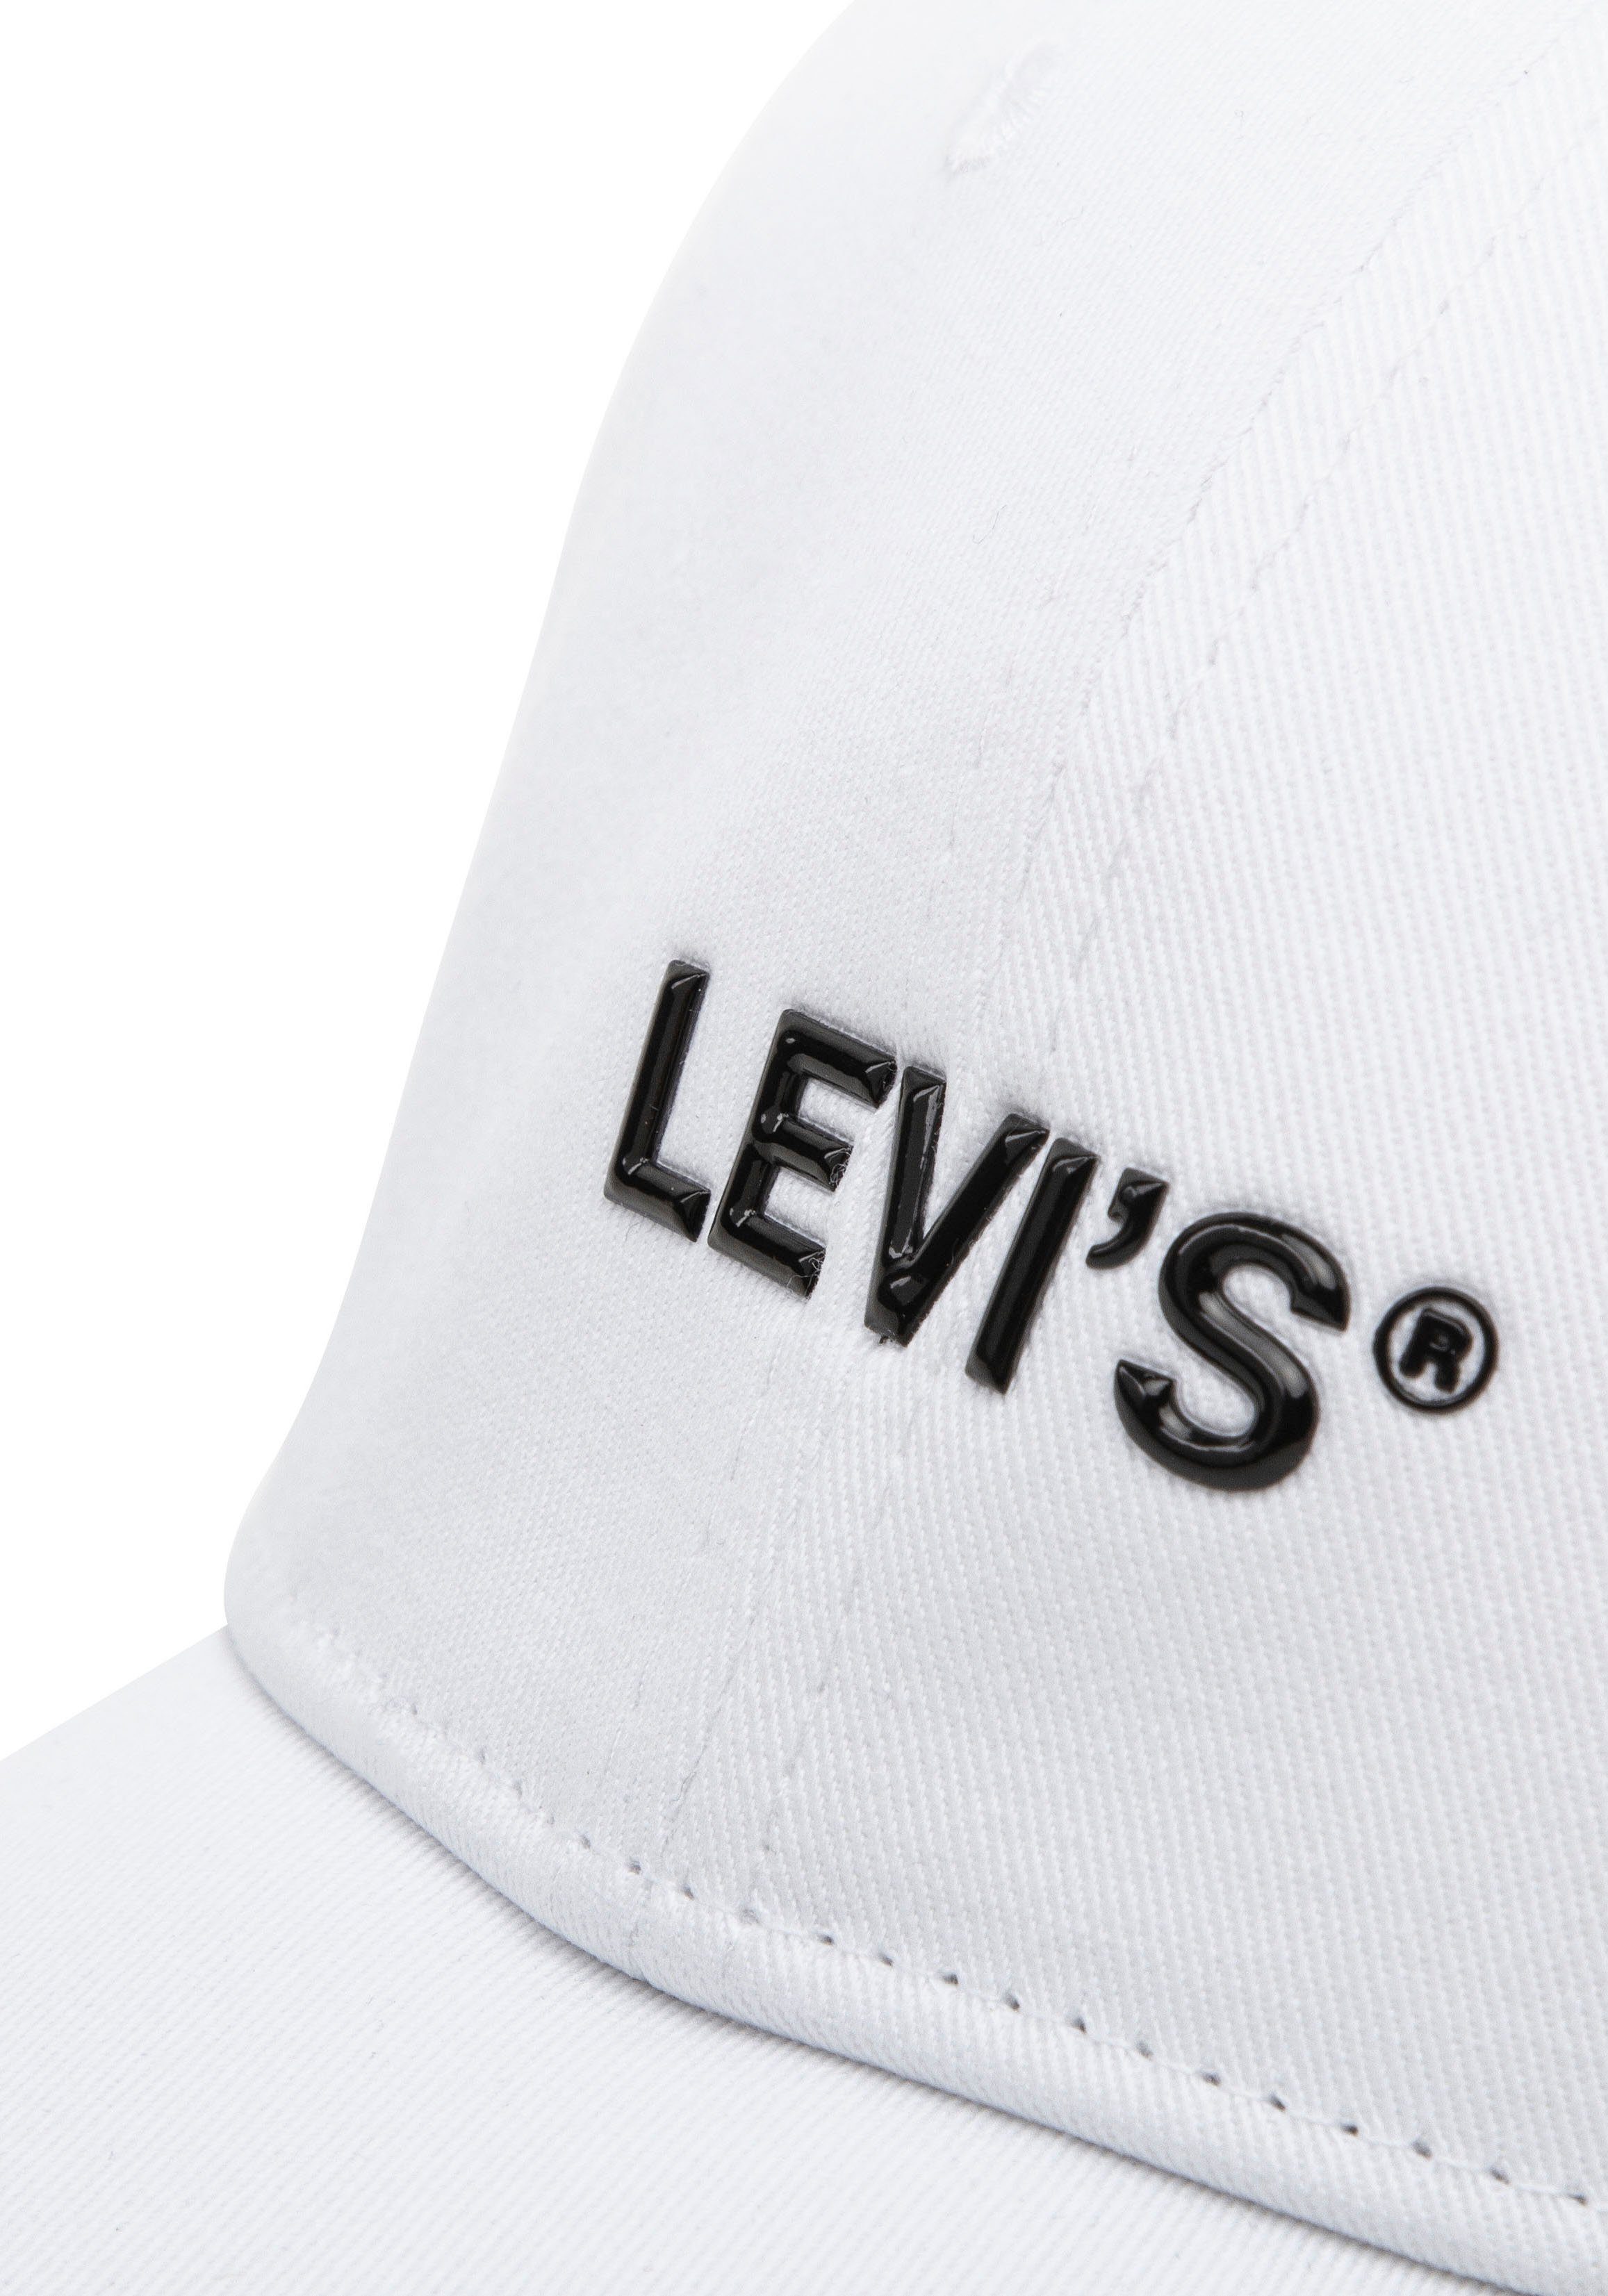 Levi's Baseballcap WOMENS YOUTH SPORT CAP